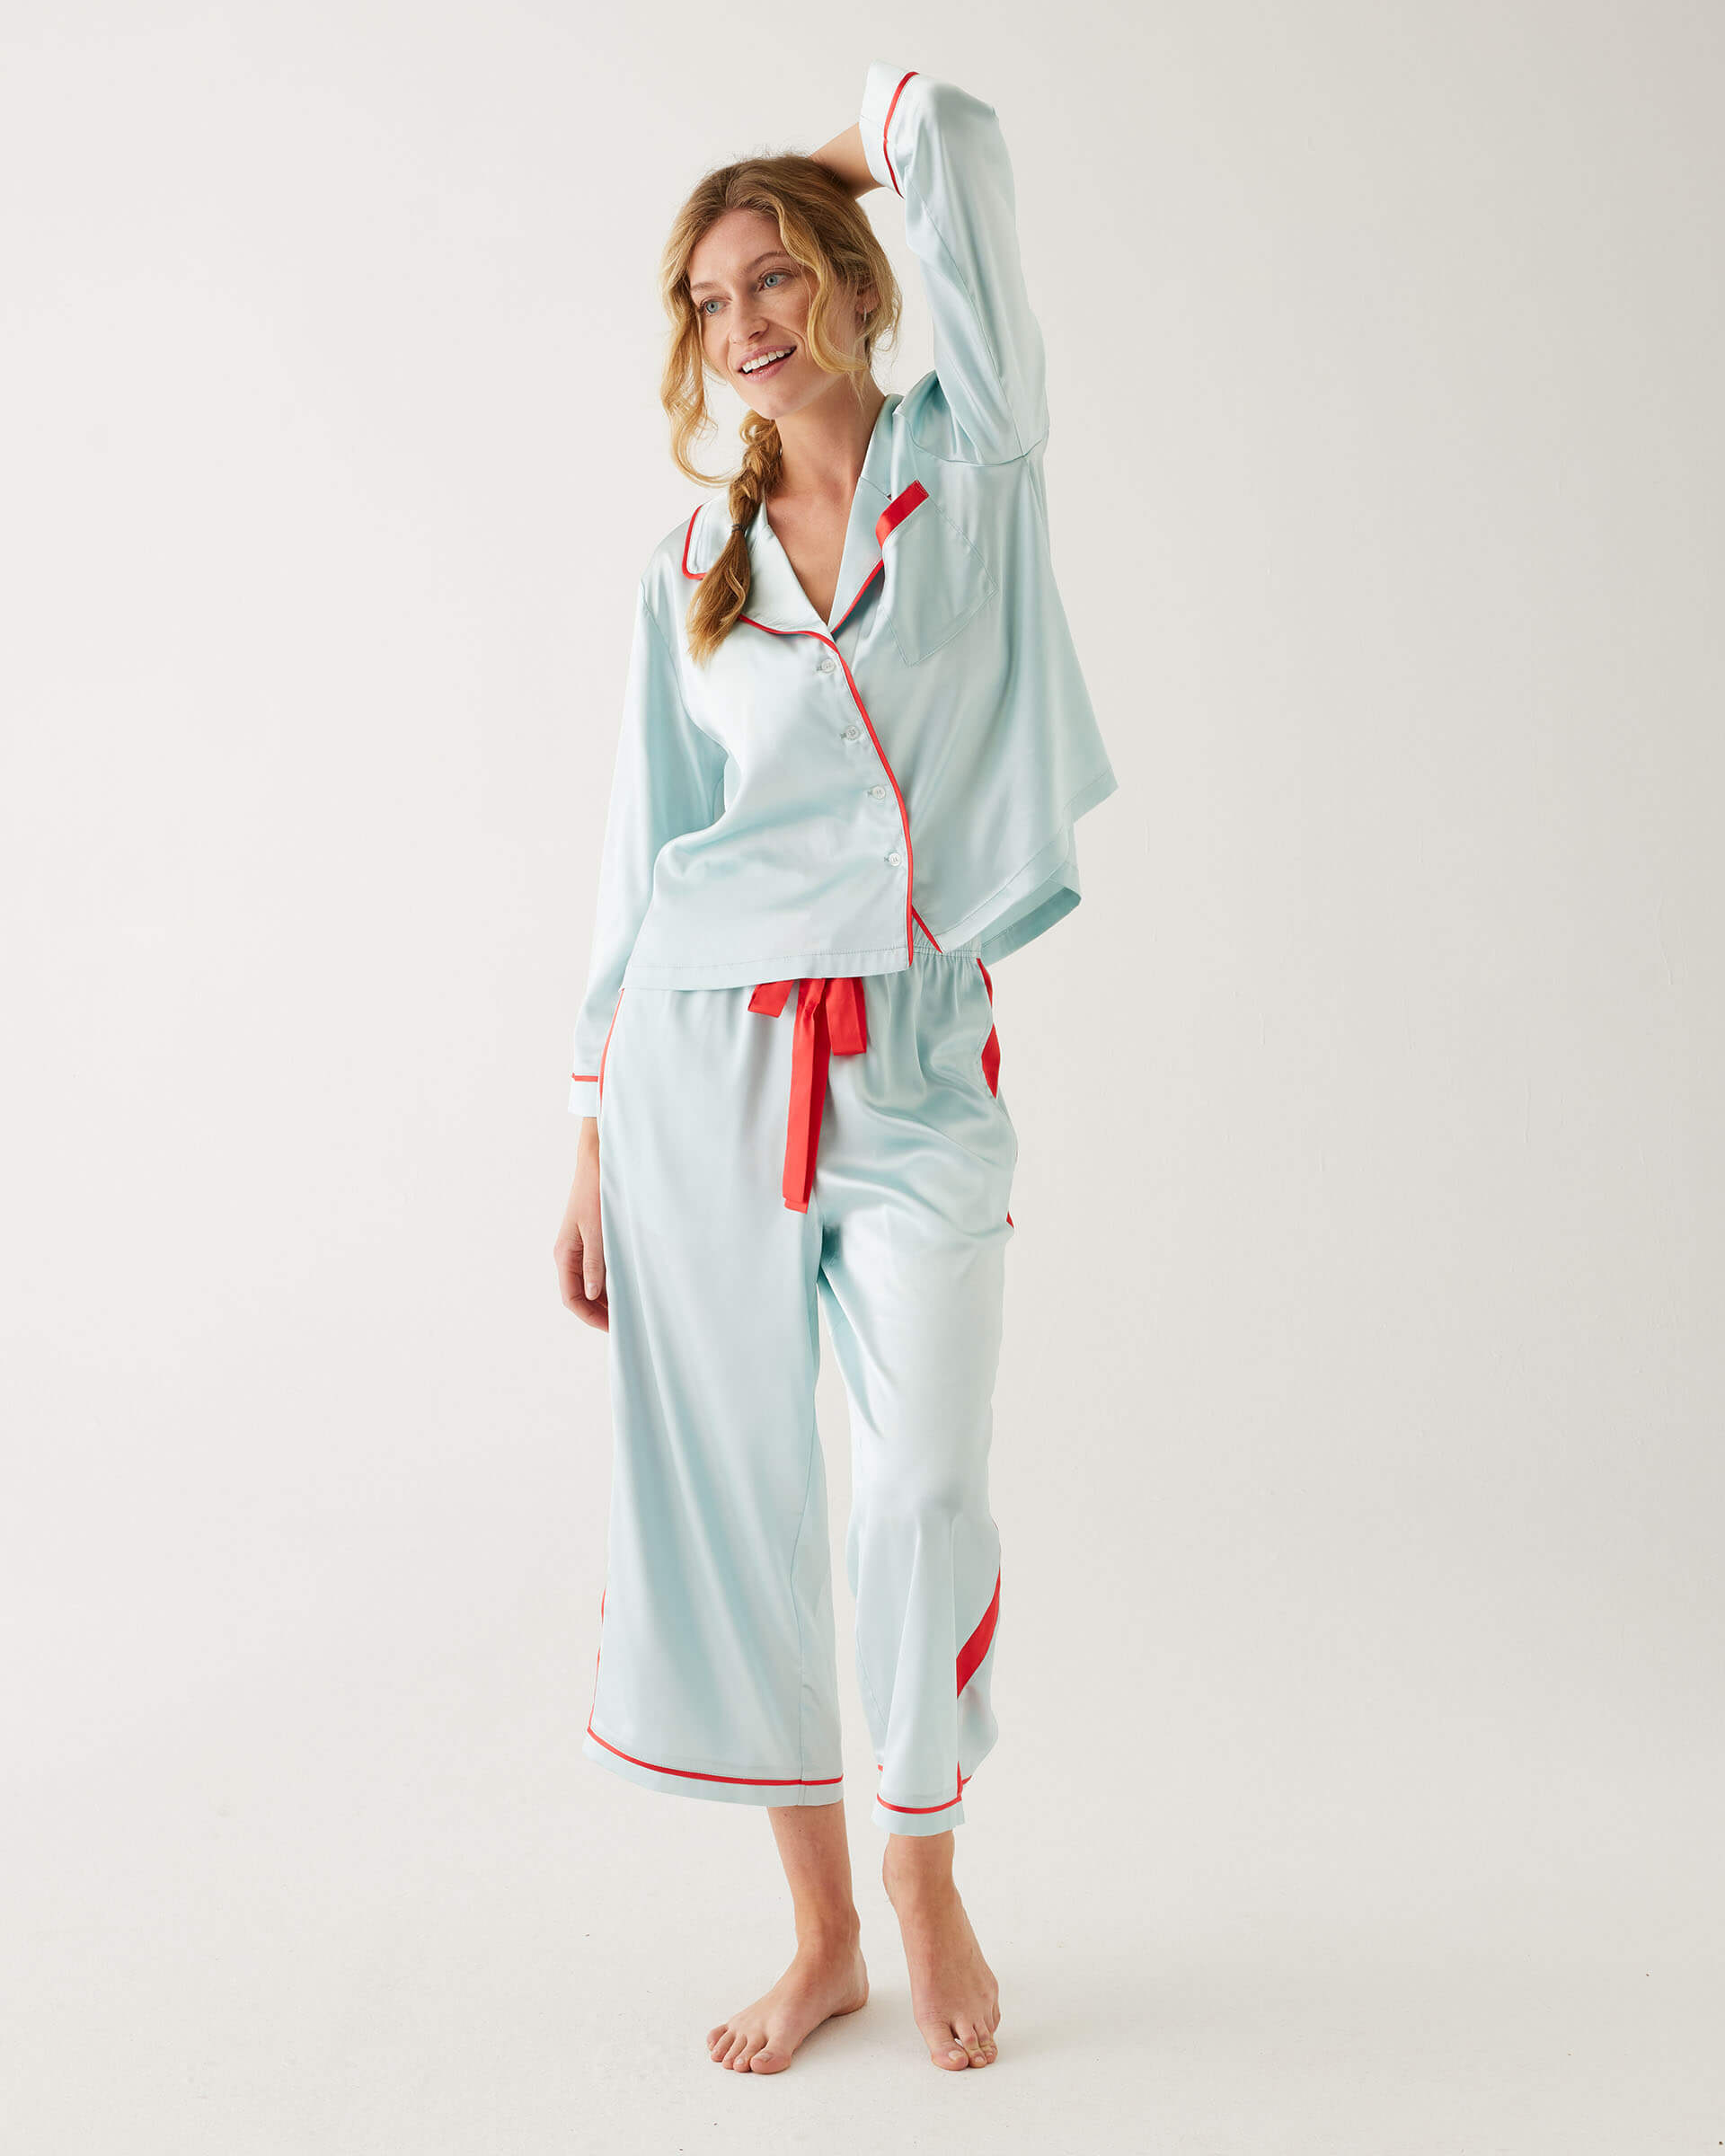 female wearing Mersea aquamarine satin sailor pajama set standing with white background